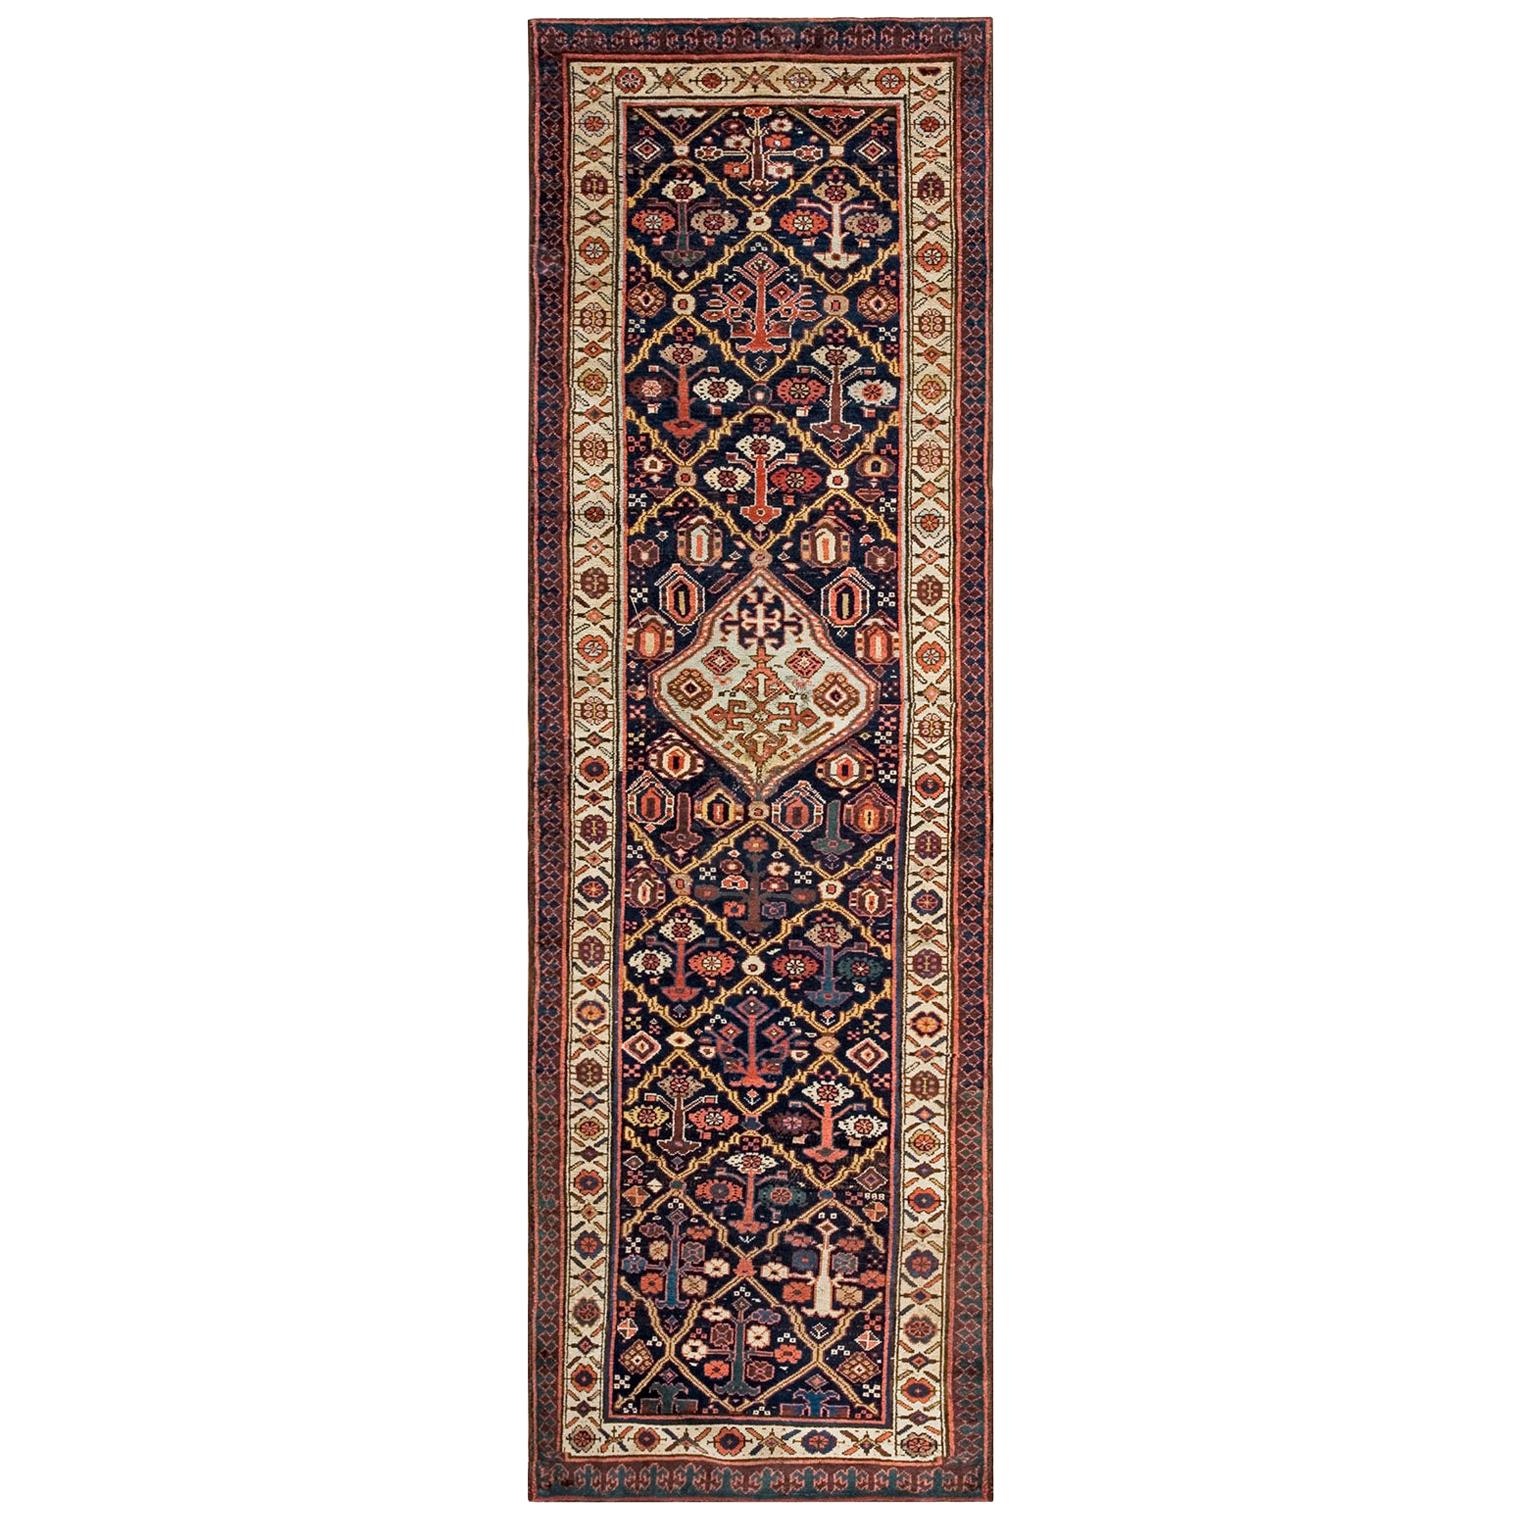 19rth Century N.W. Persian Runner Carpet ( 3'3" x 10'3" - 99 x 312 )